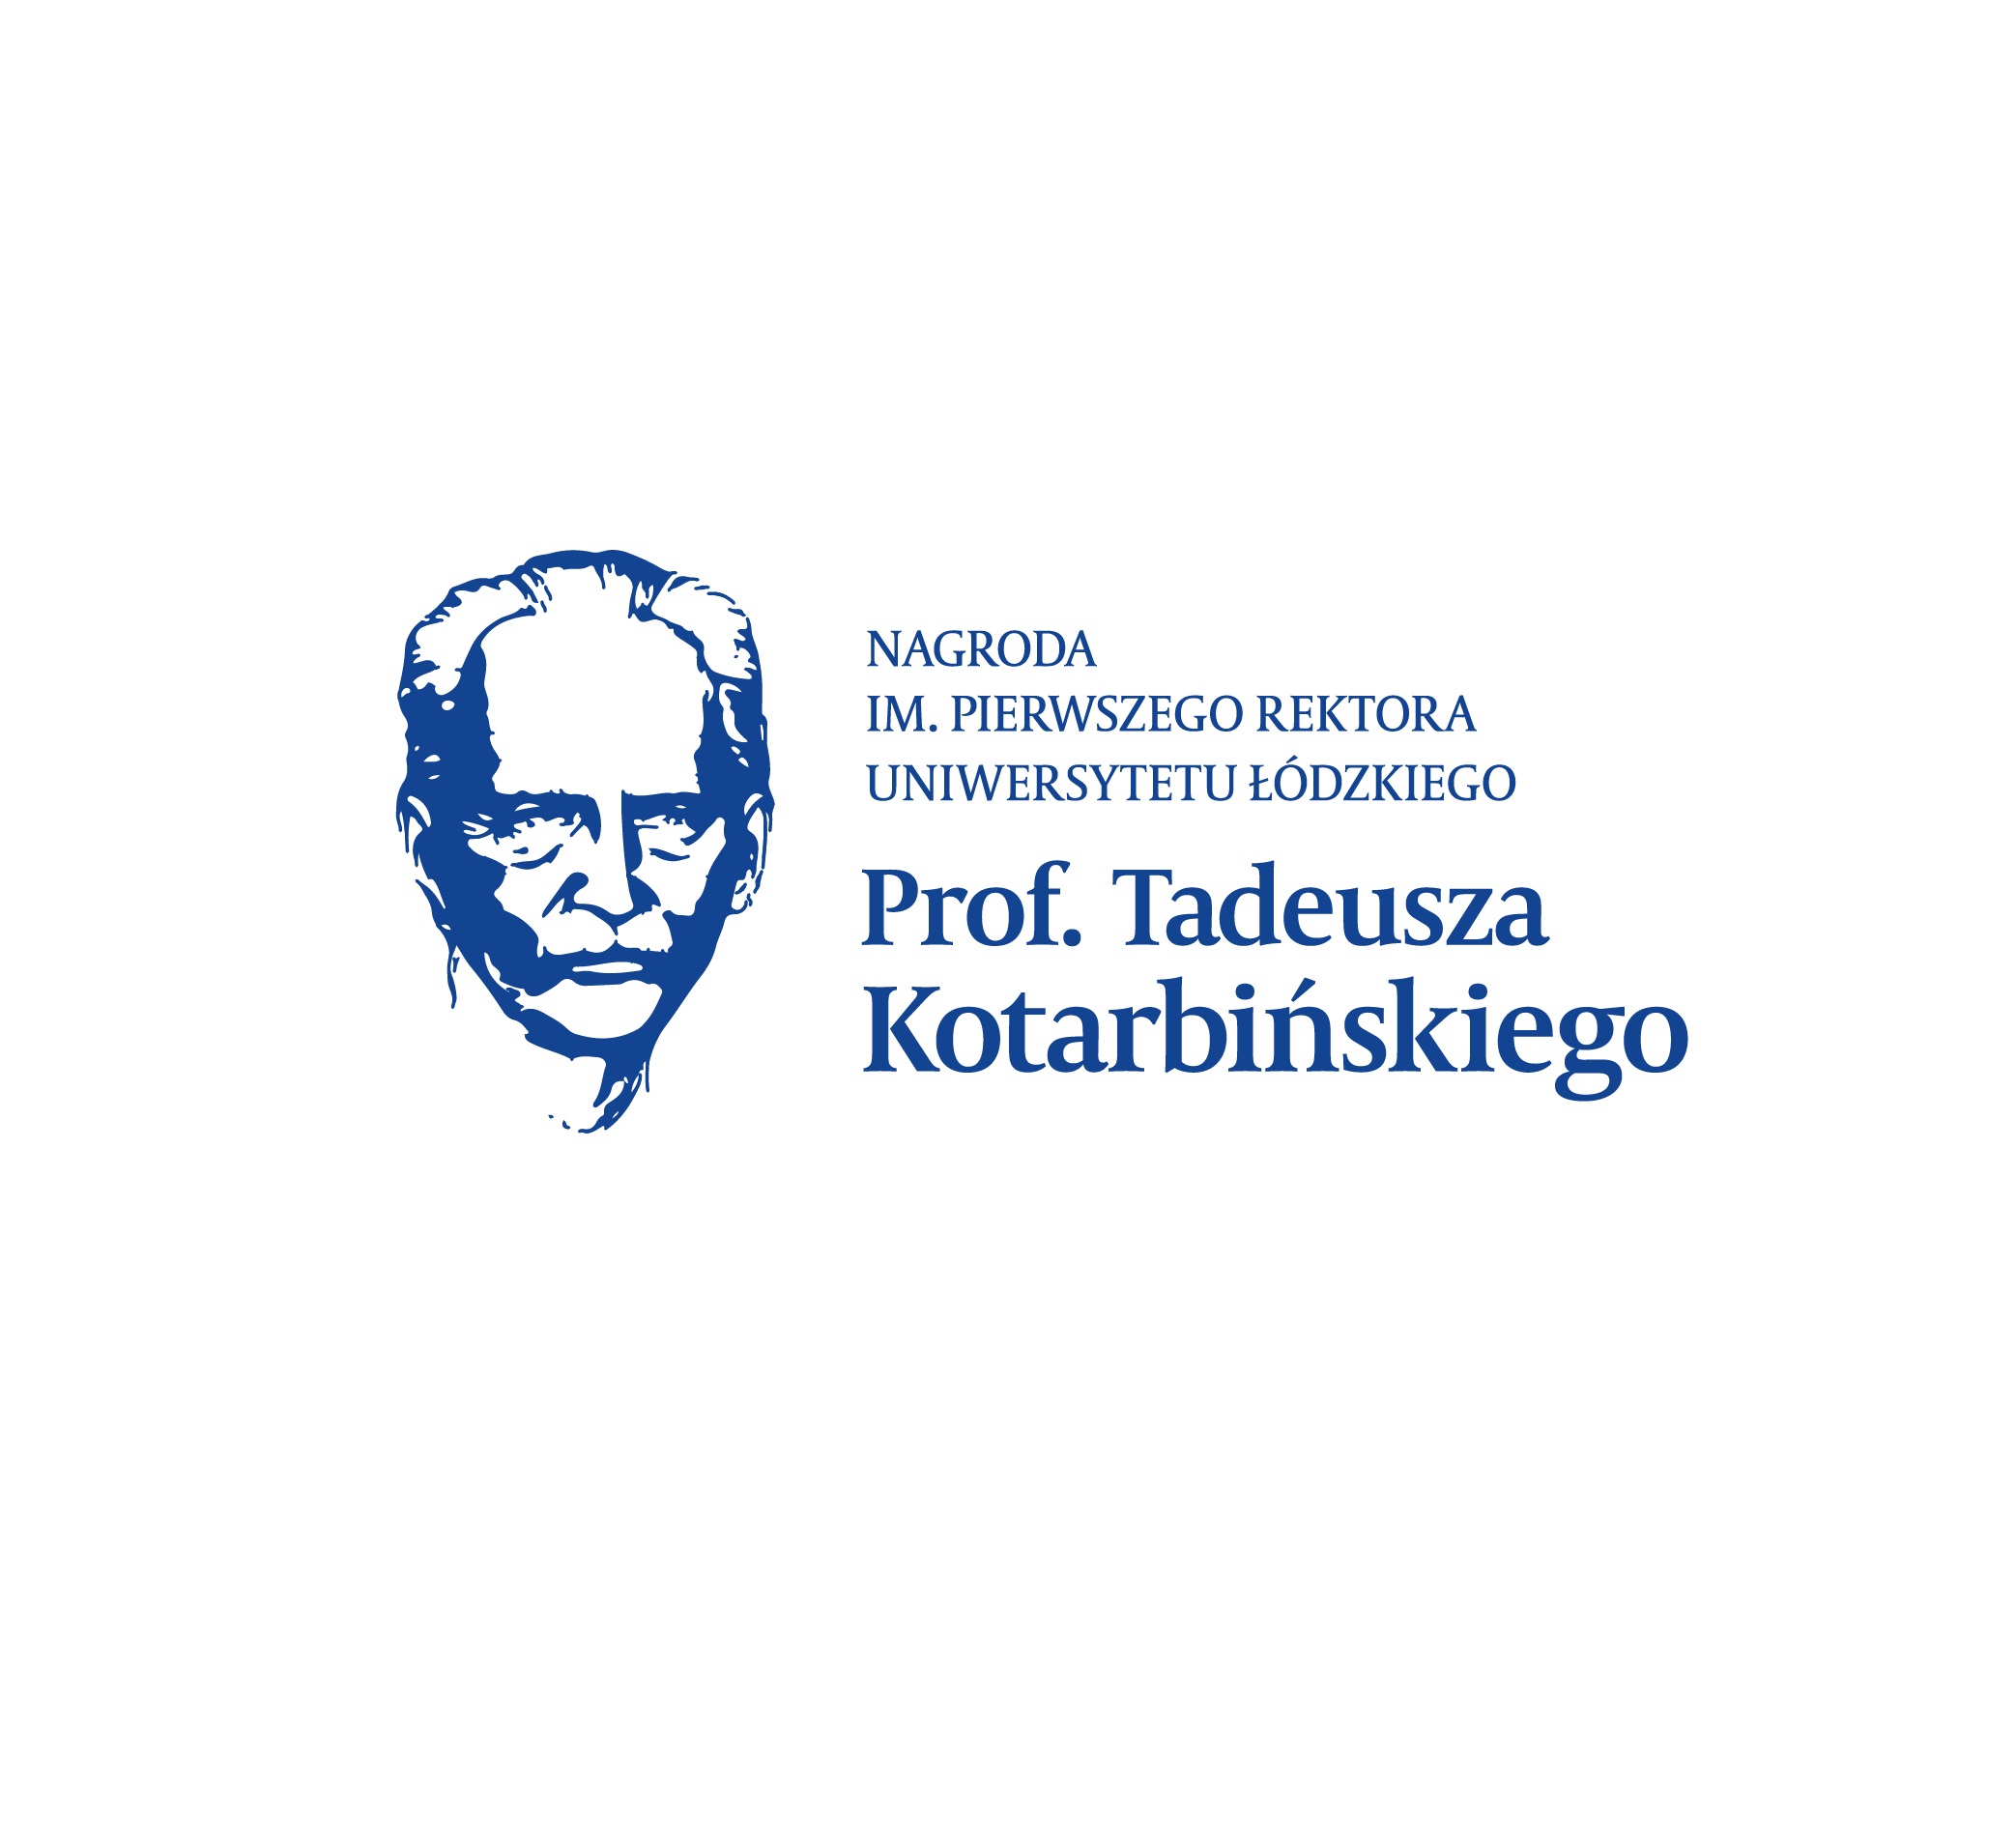 Kotarbiński logo.jpg